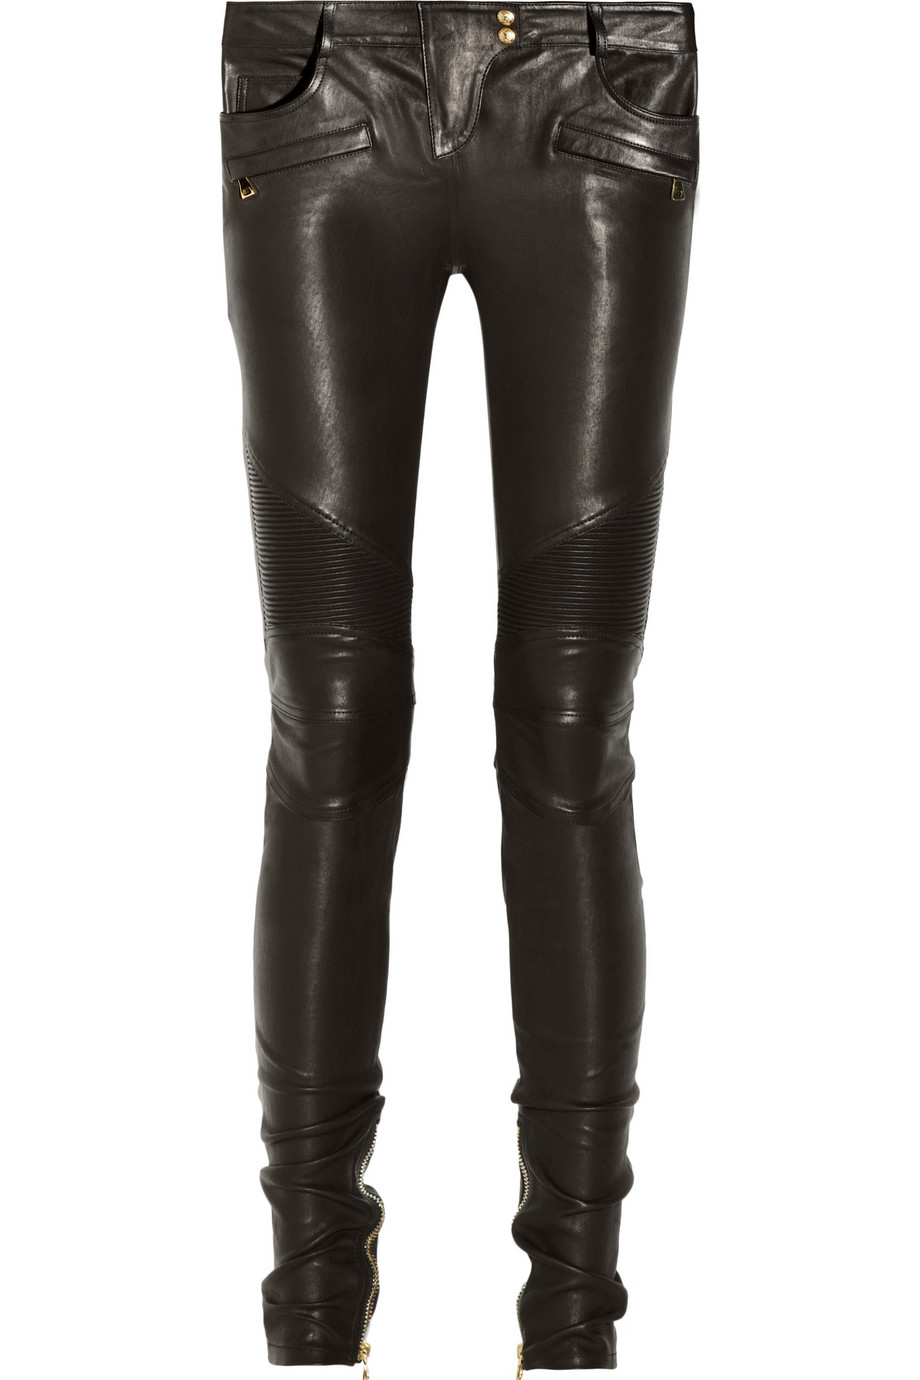 Balmain Leather Motocross-style Skinny Pants in Black - Lyst